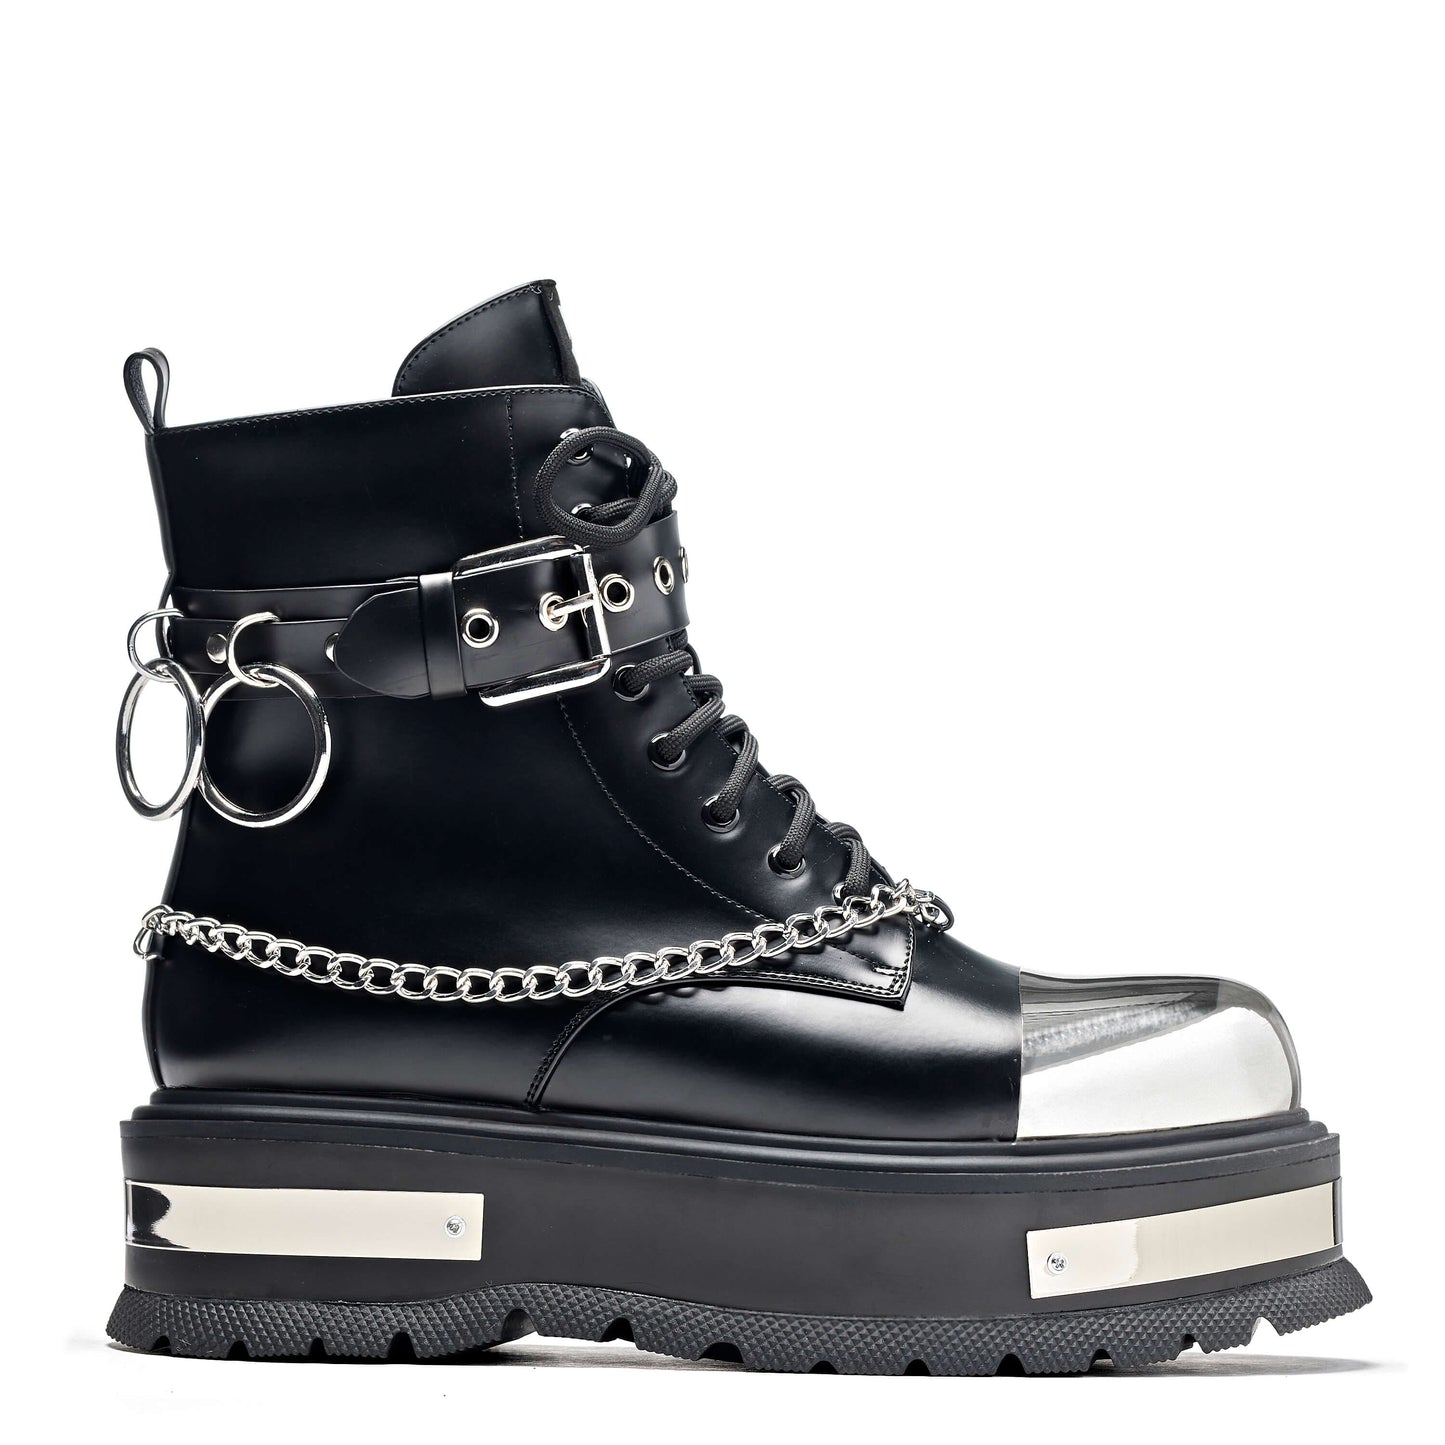 Borin Men's Hardware Platform Boots - Ankle Boots - KOI Footwear - Black - Side View